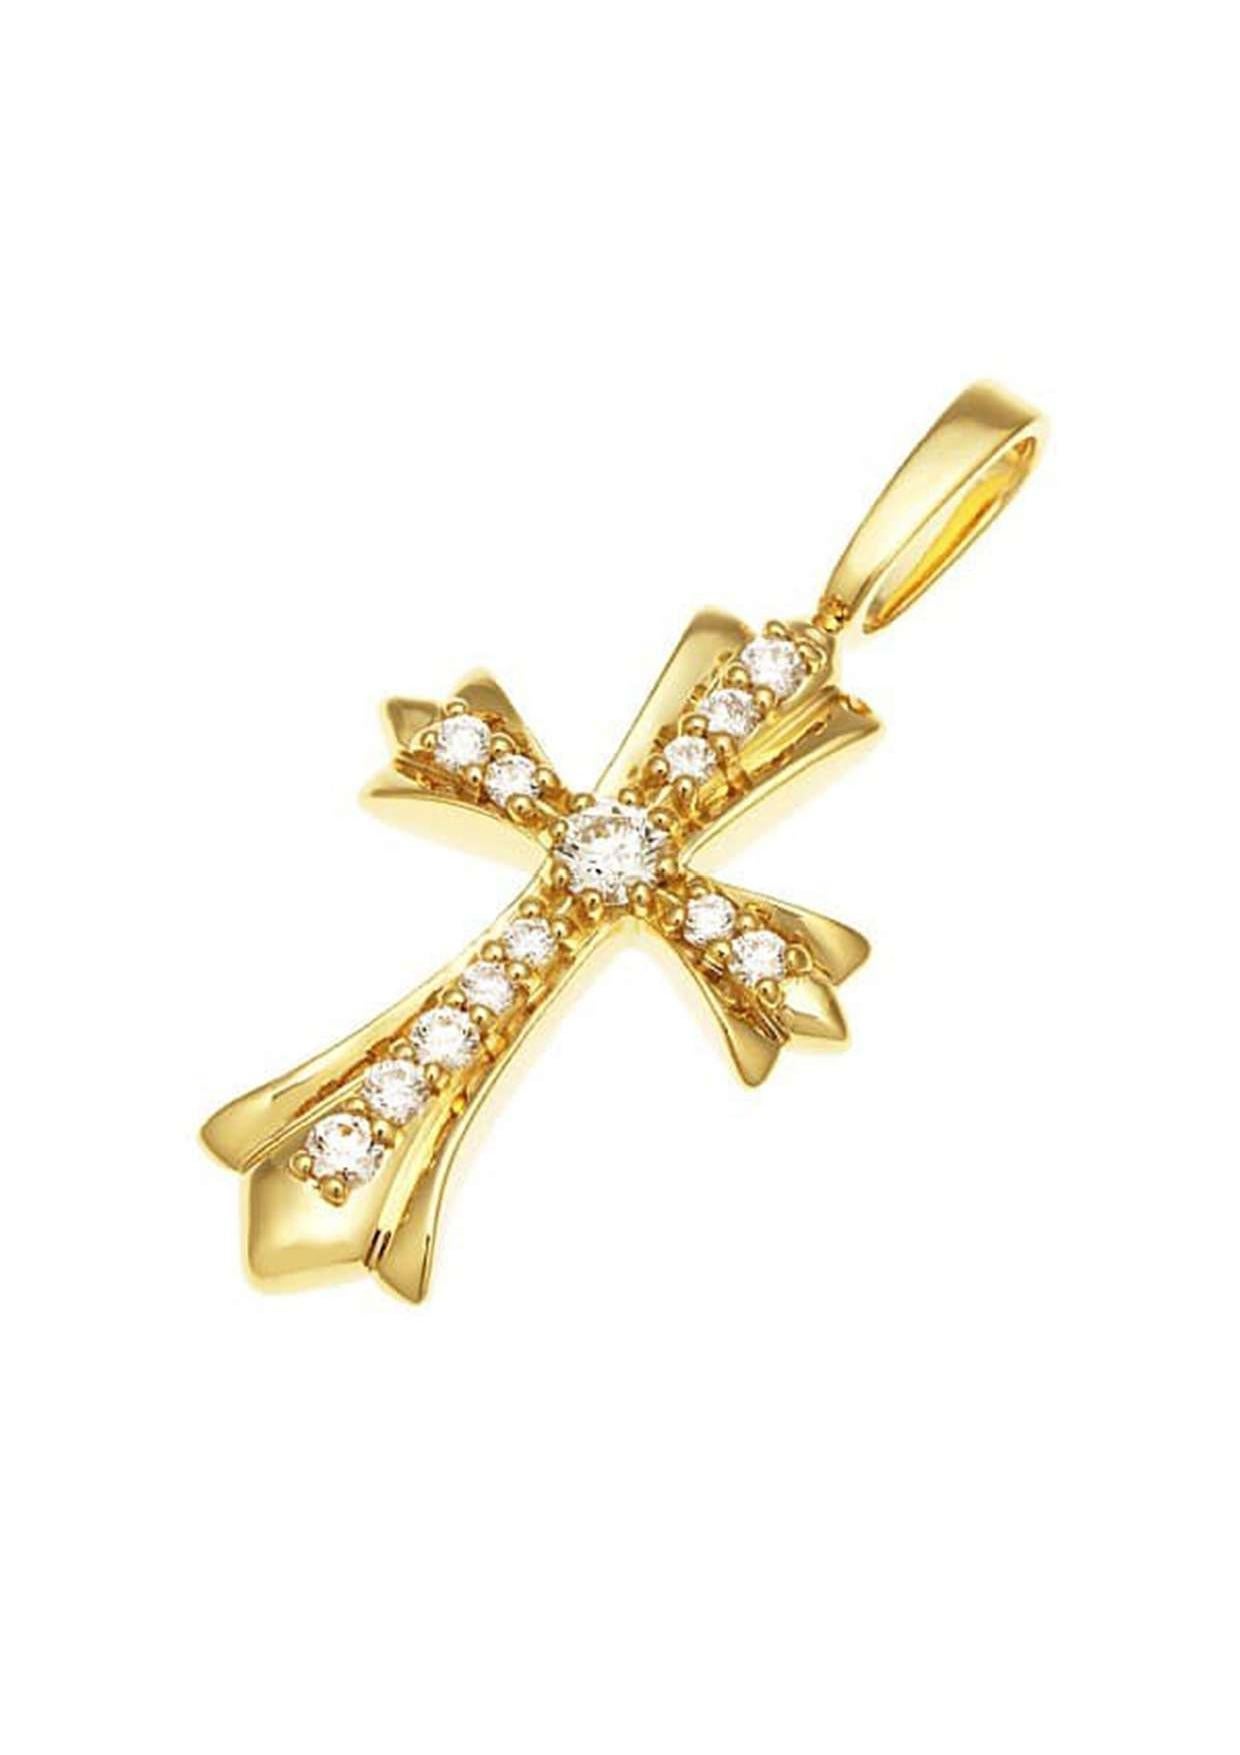 Briolette Cut 18K Yellow Gold Diamond Cross Pendant Top, 0.43ct For Sale